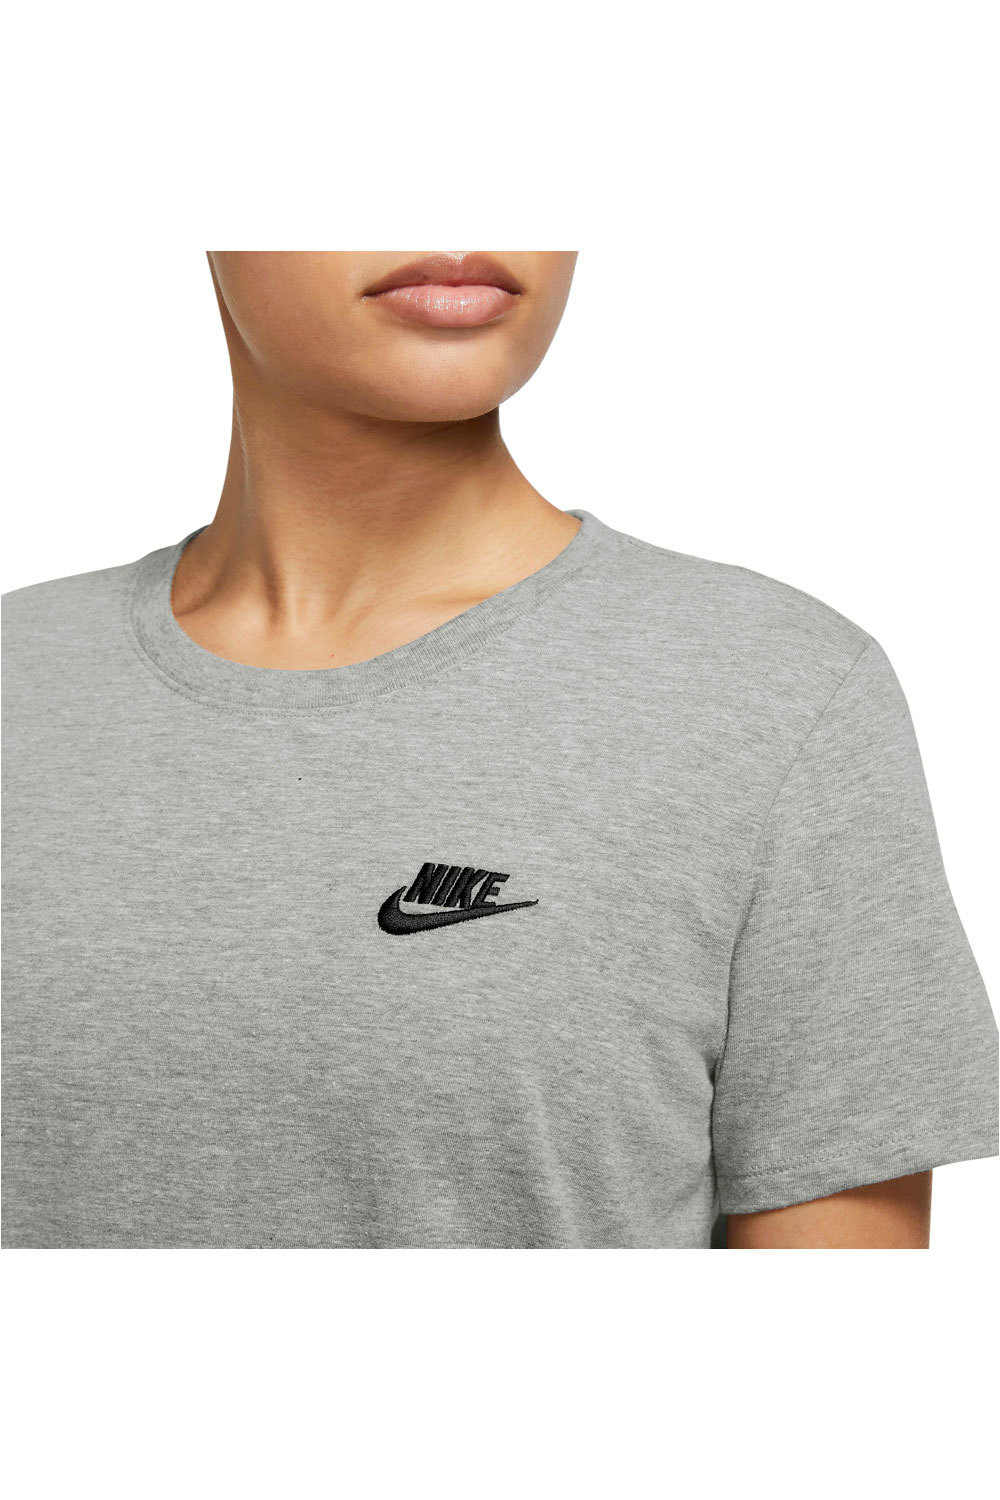 Nike camiseta manga corta mujer W NSW TEE CLUB vista detalle